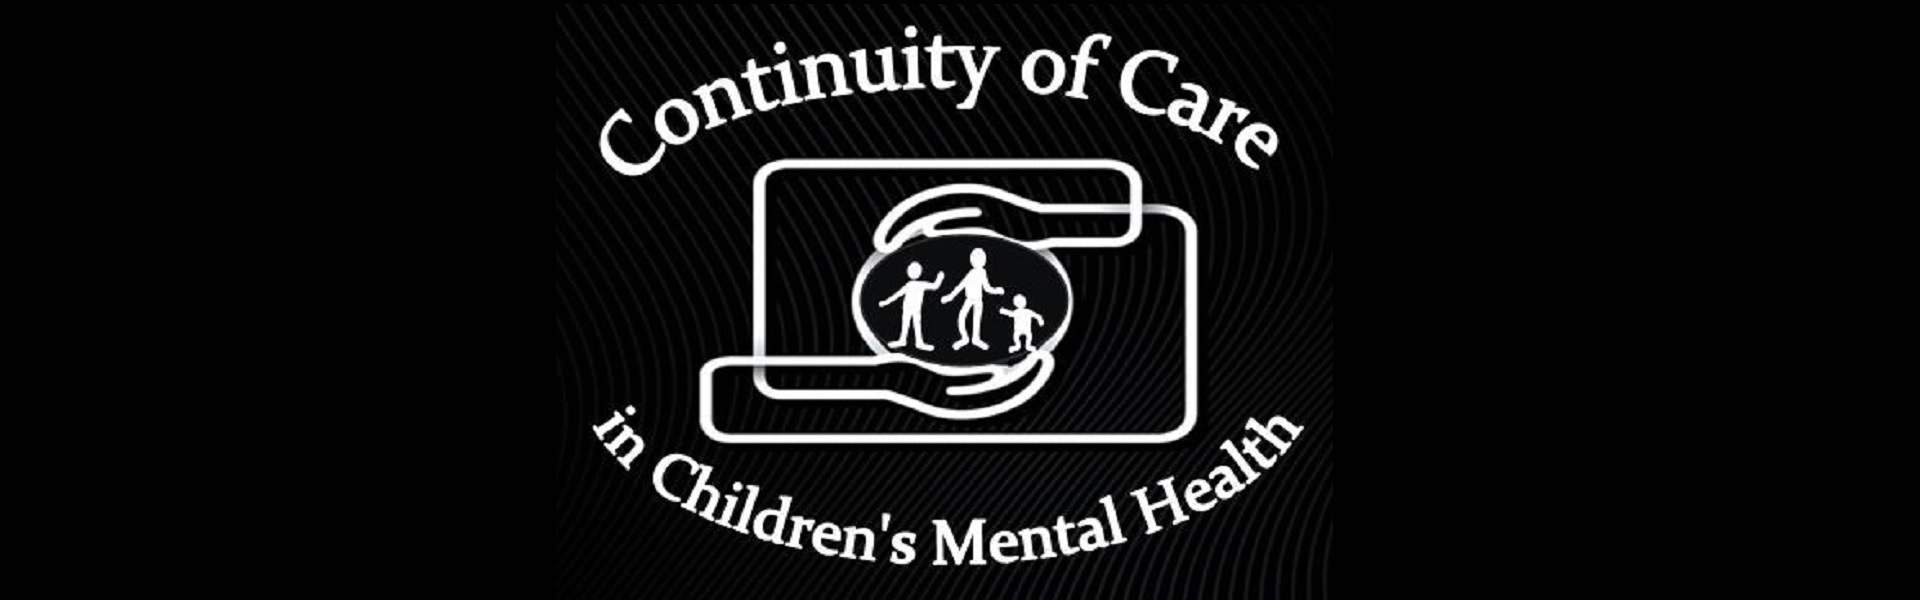 Continuity of Care logo